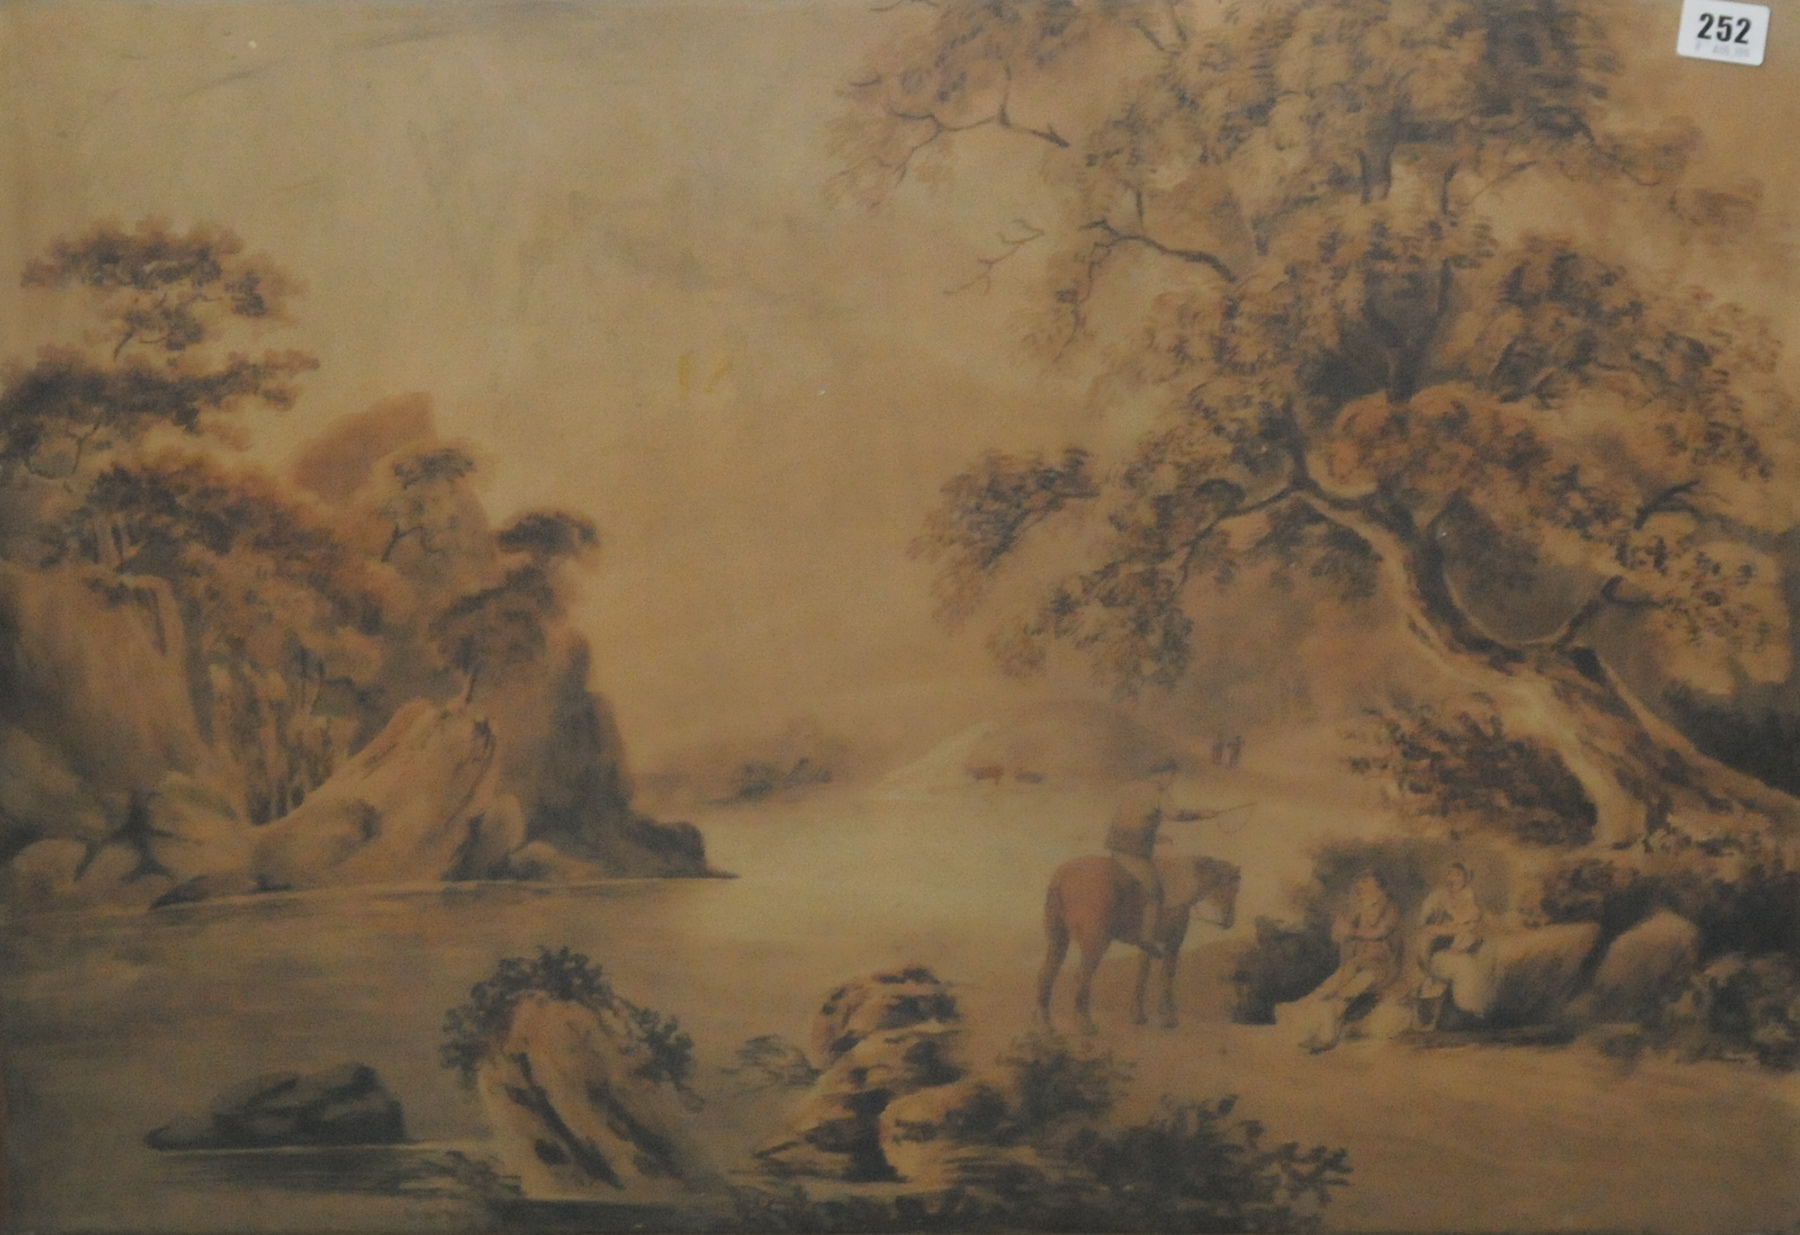 ENGLISH SCHOOL C.1800.
Mountainous landscape with figures.
Watercolour.
18¾" x 27".